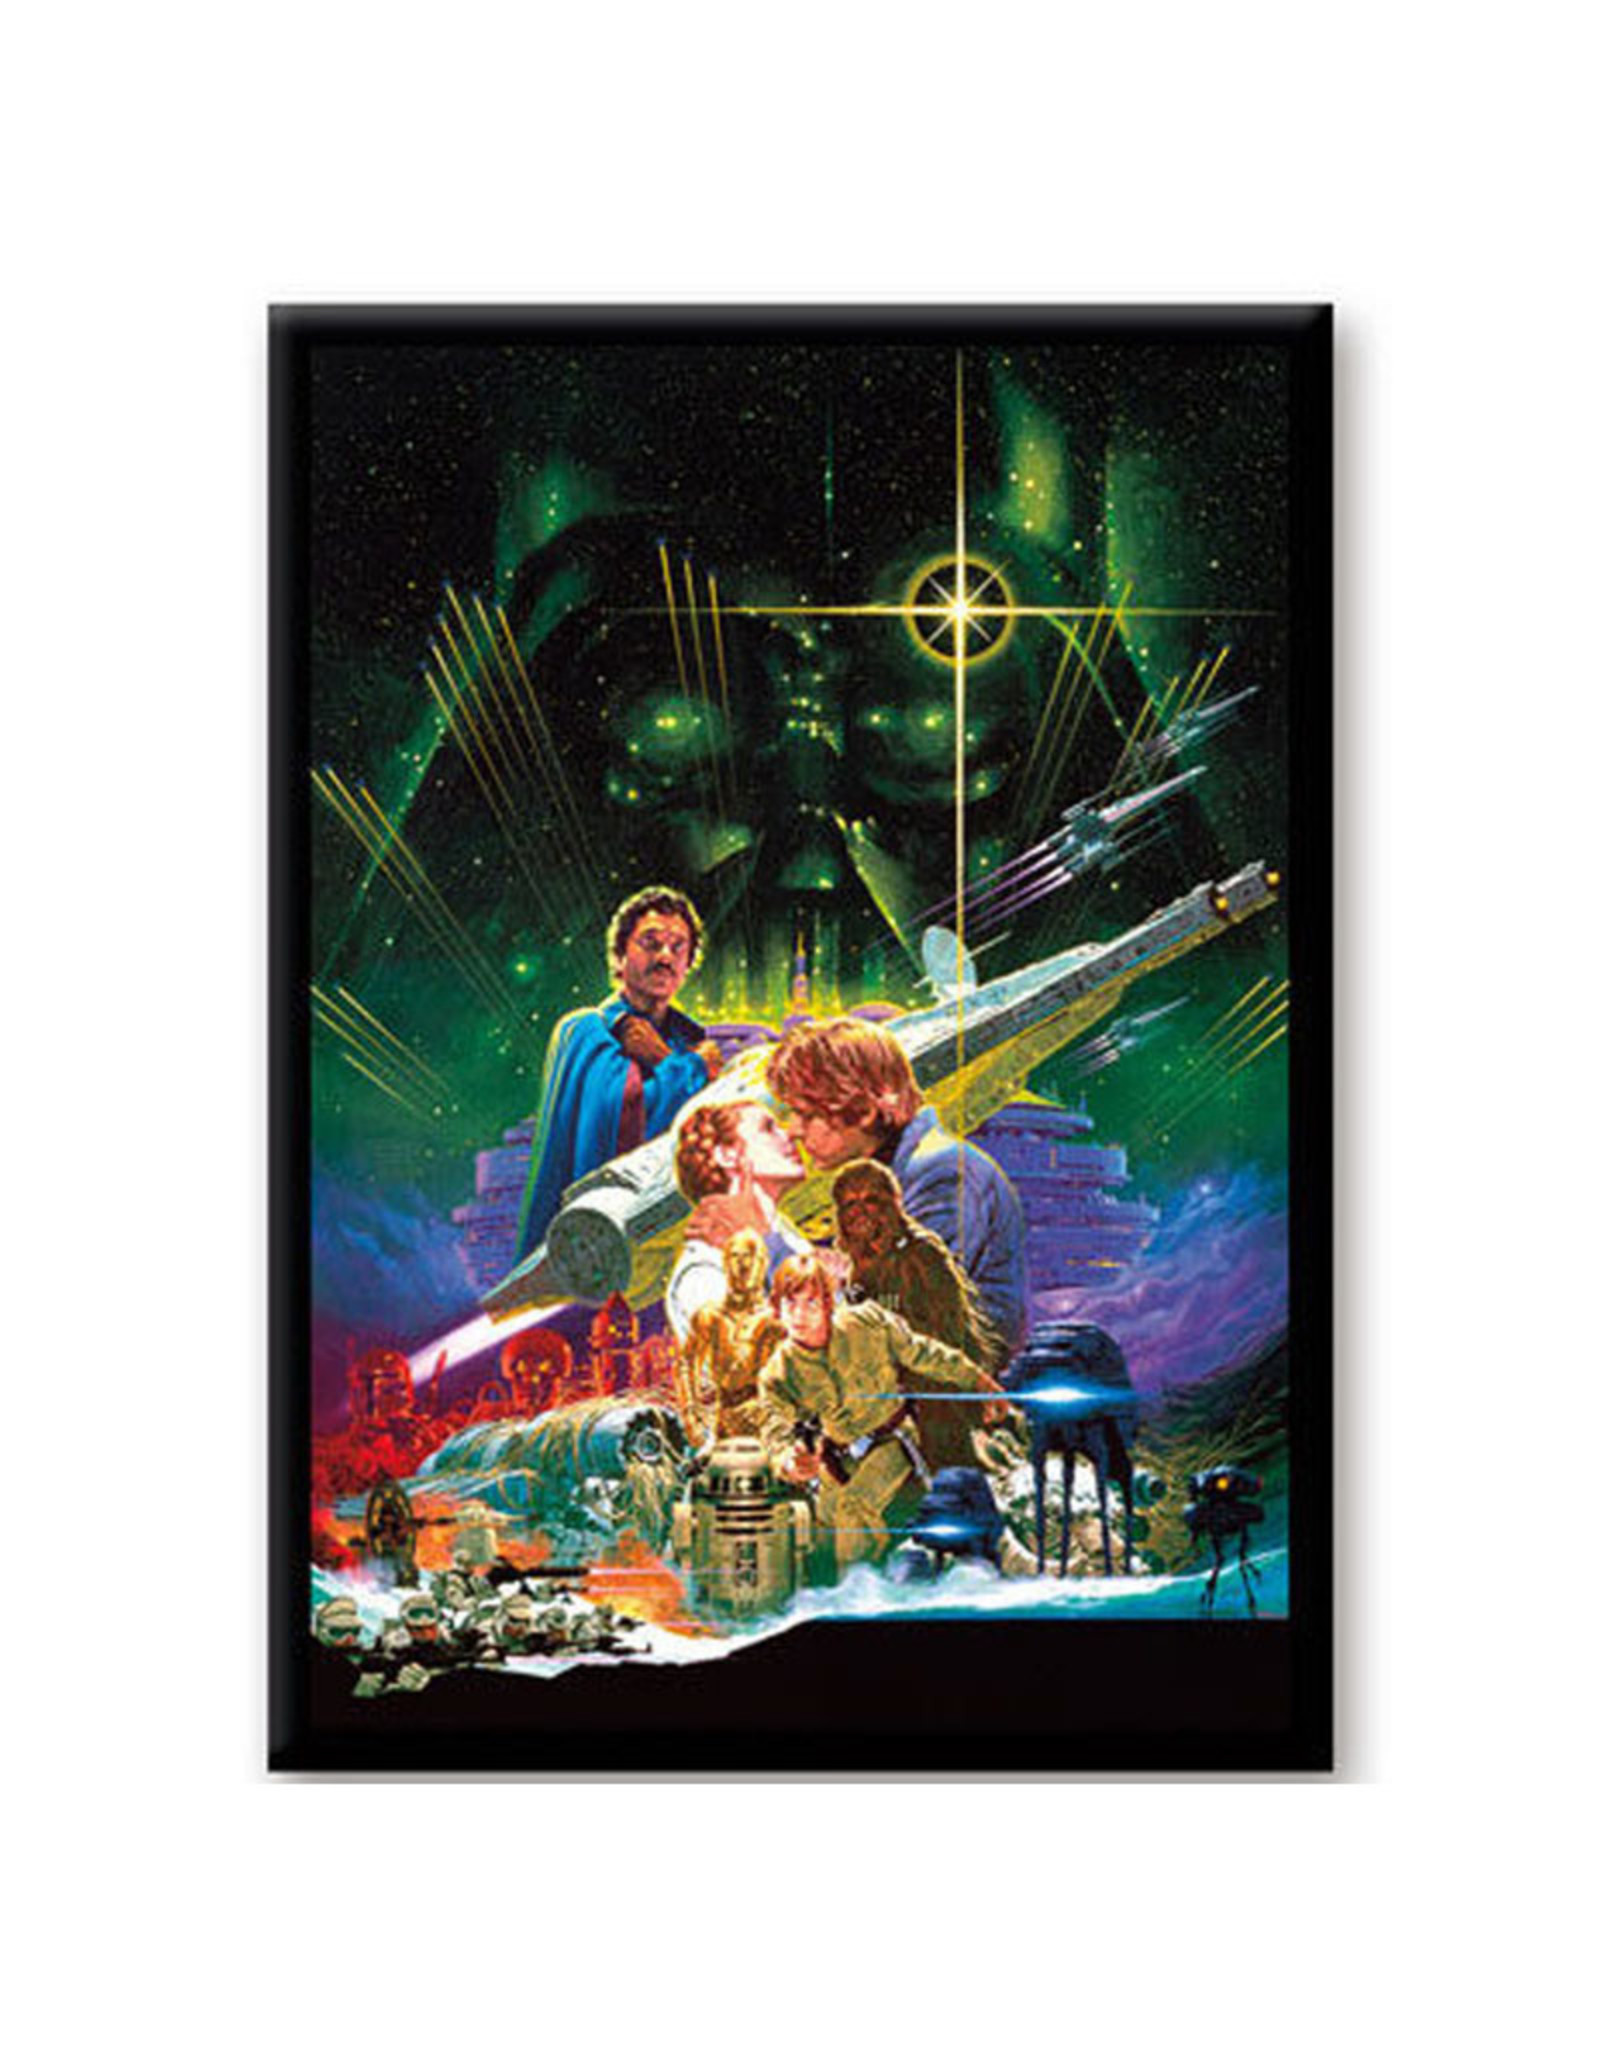 Ata-Boy Star Wars: The Empire Strikes Back Retro Poster Flat Magnet